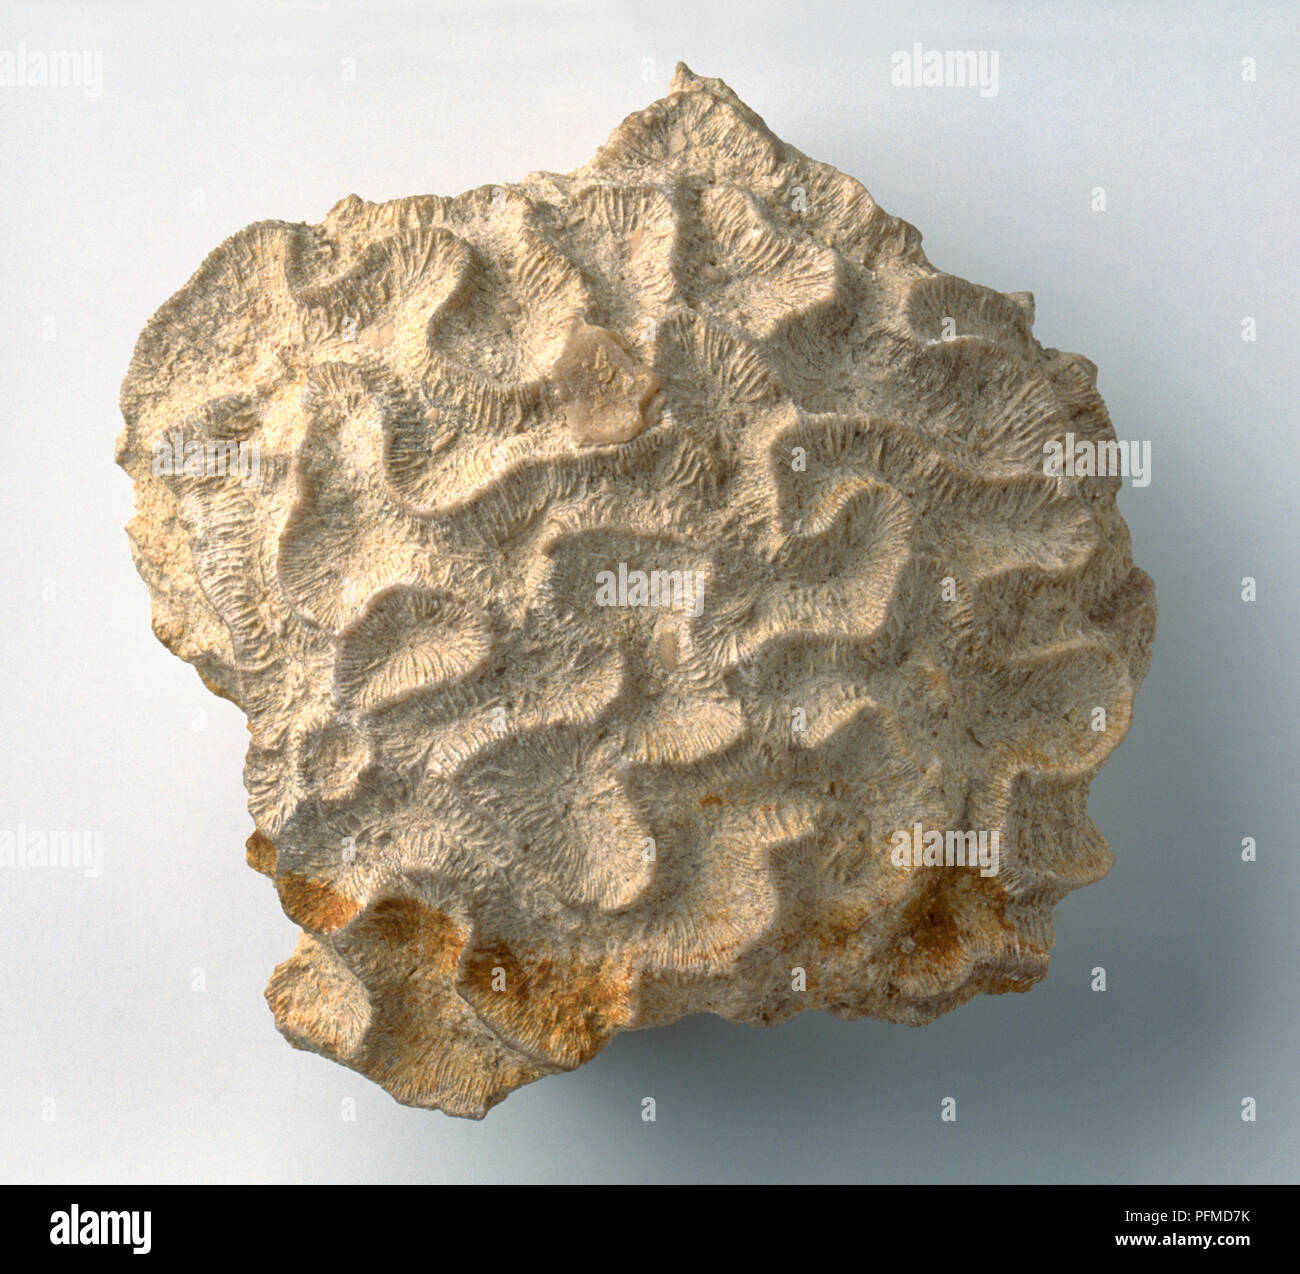 Brain Coral (Colpophyllia stellata), fossil, close-up Stockfoto